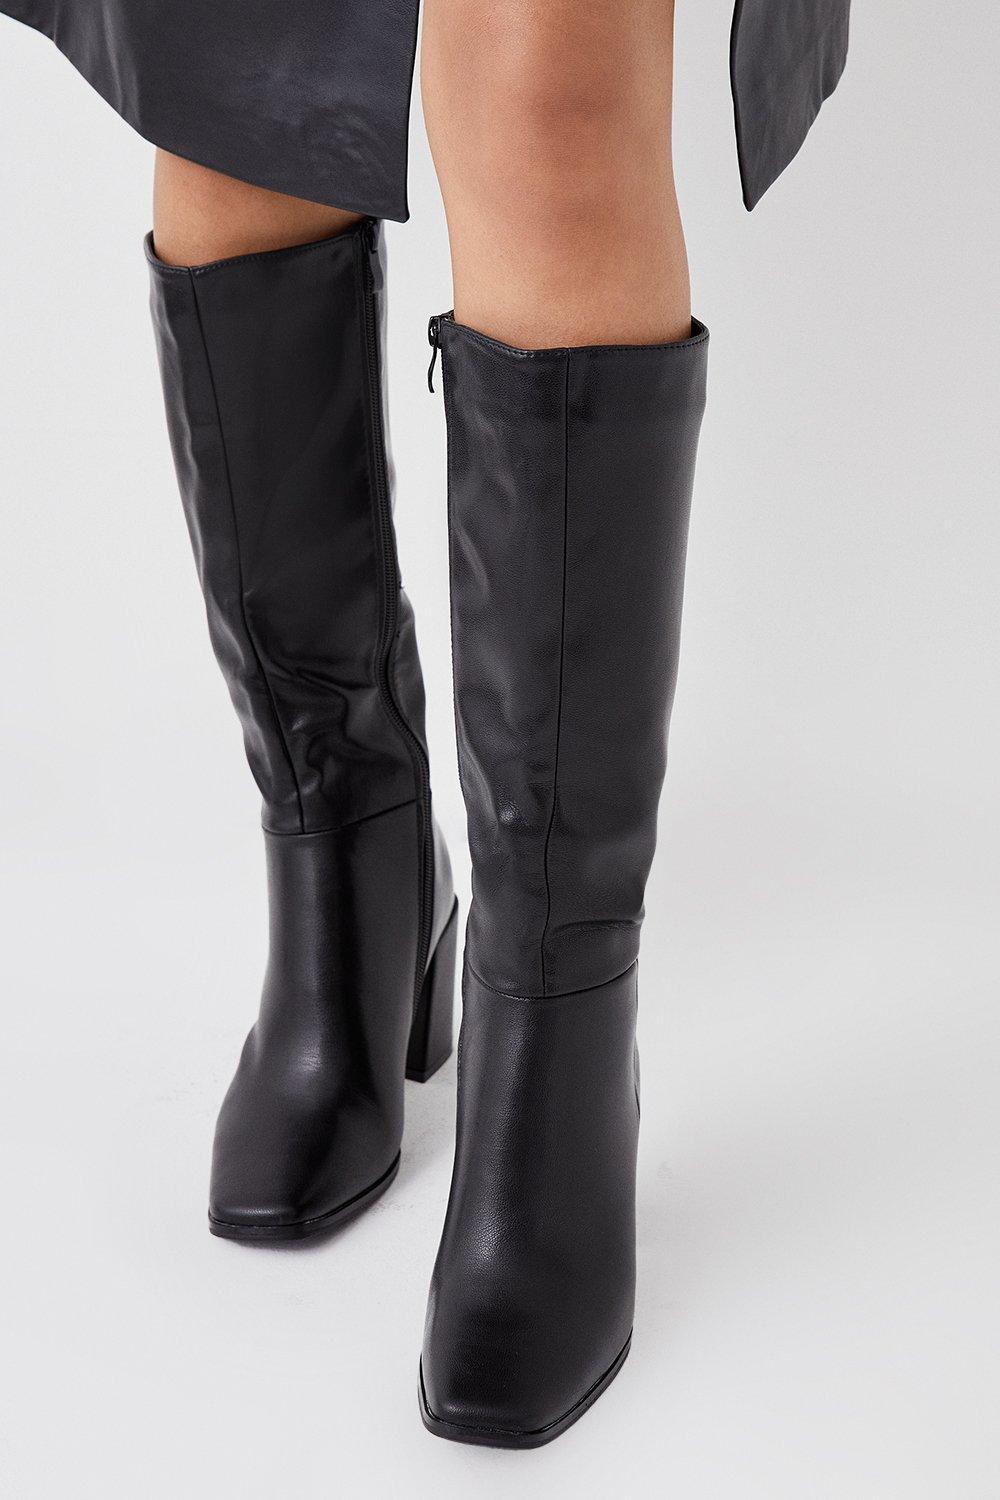 Women’s Kristen Square Toe Clean Knee High Boots - black - 3